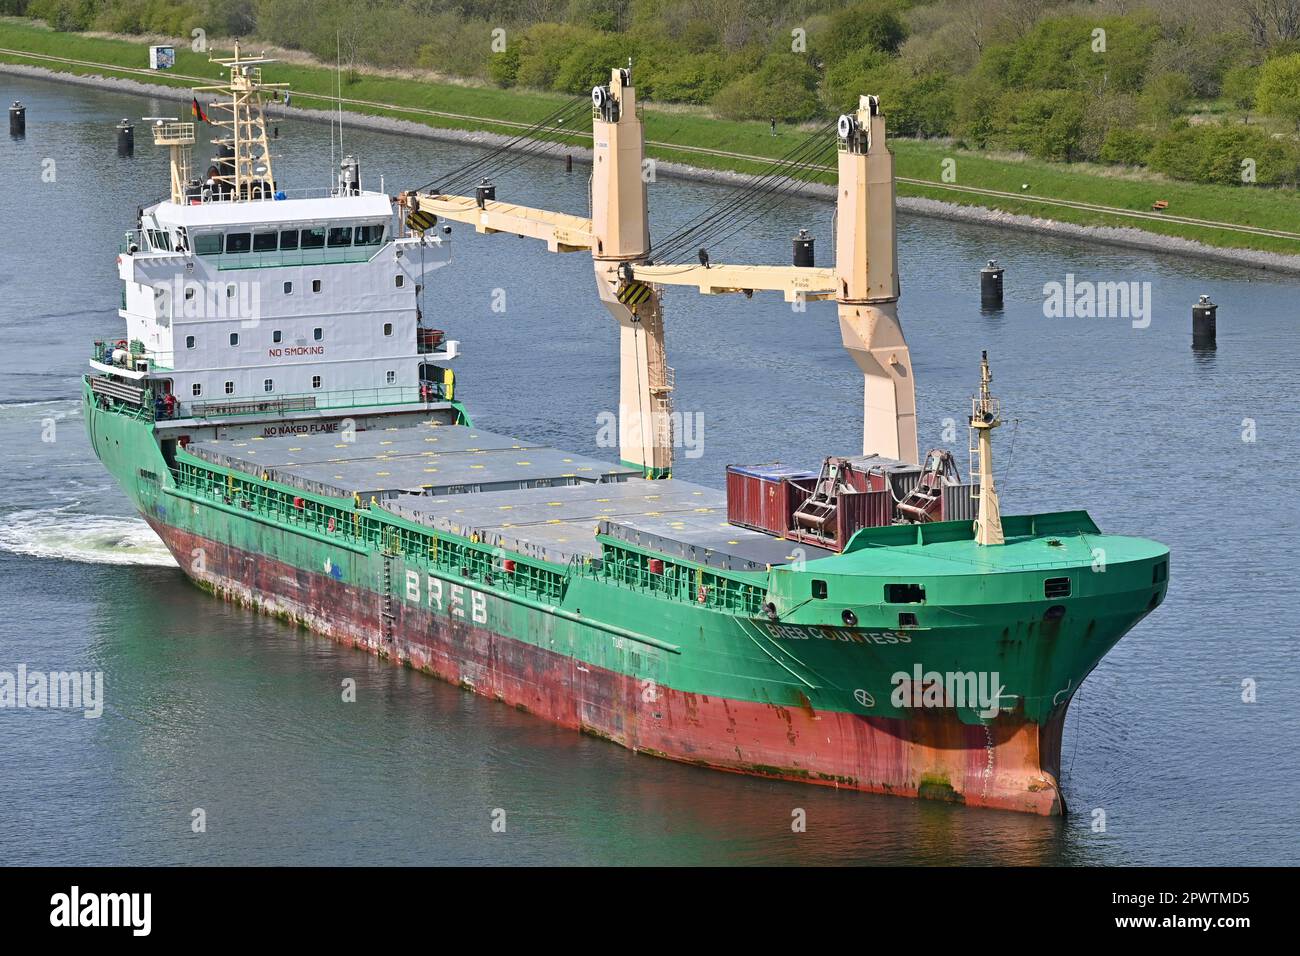 General Cargo Ship BREB COUNTESS at the Kiel Canal Stock Photo